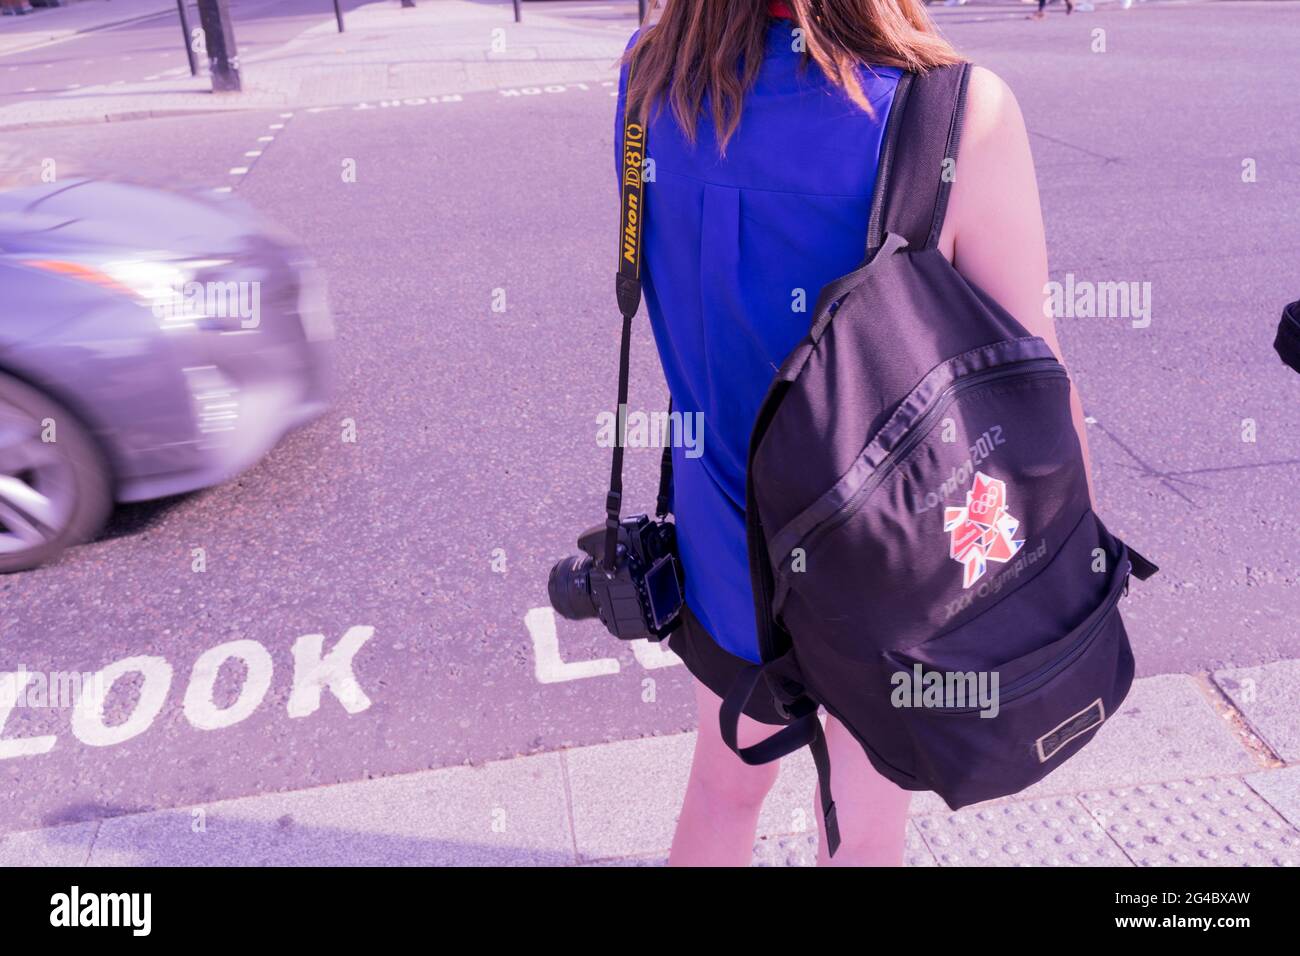 woman in blue top carries London 2012 rucksack waiting at pedestrian crossing lights to turn green, London trafalgar square, England, UK Stock Photo